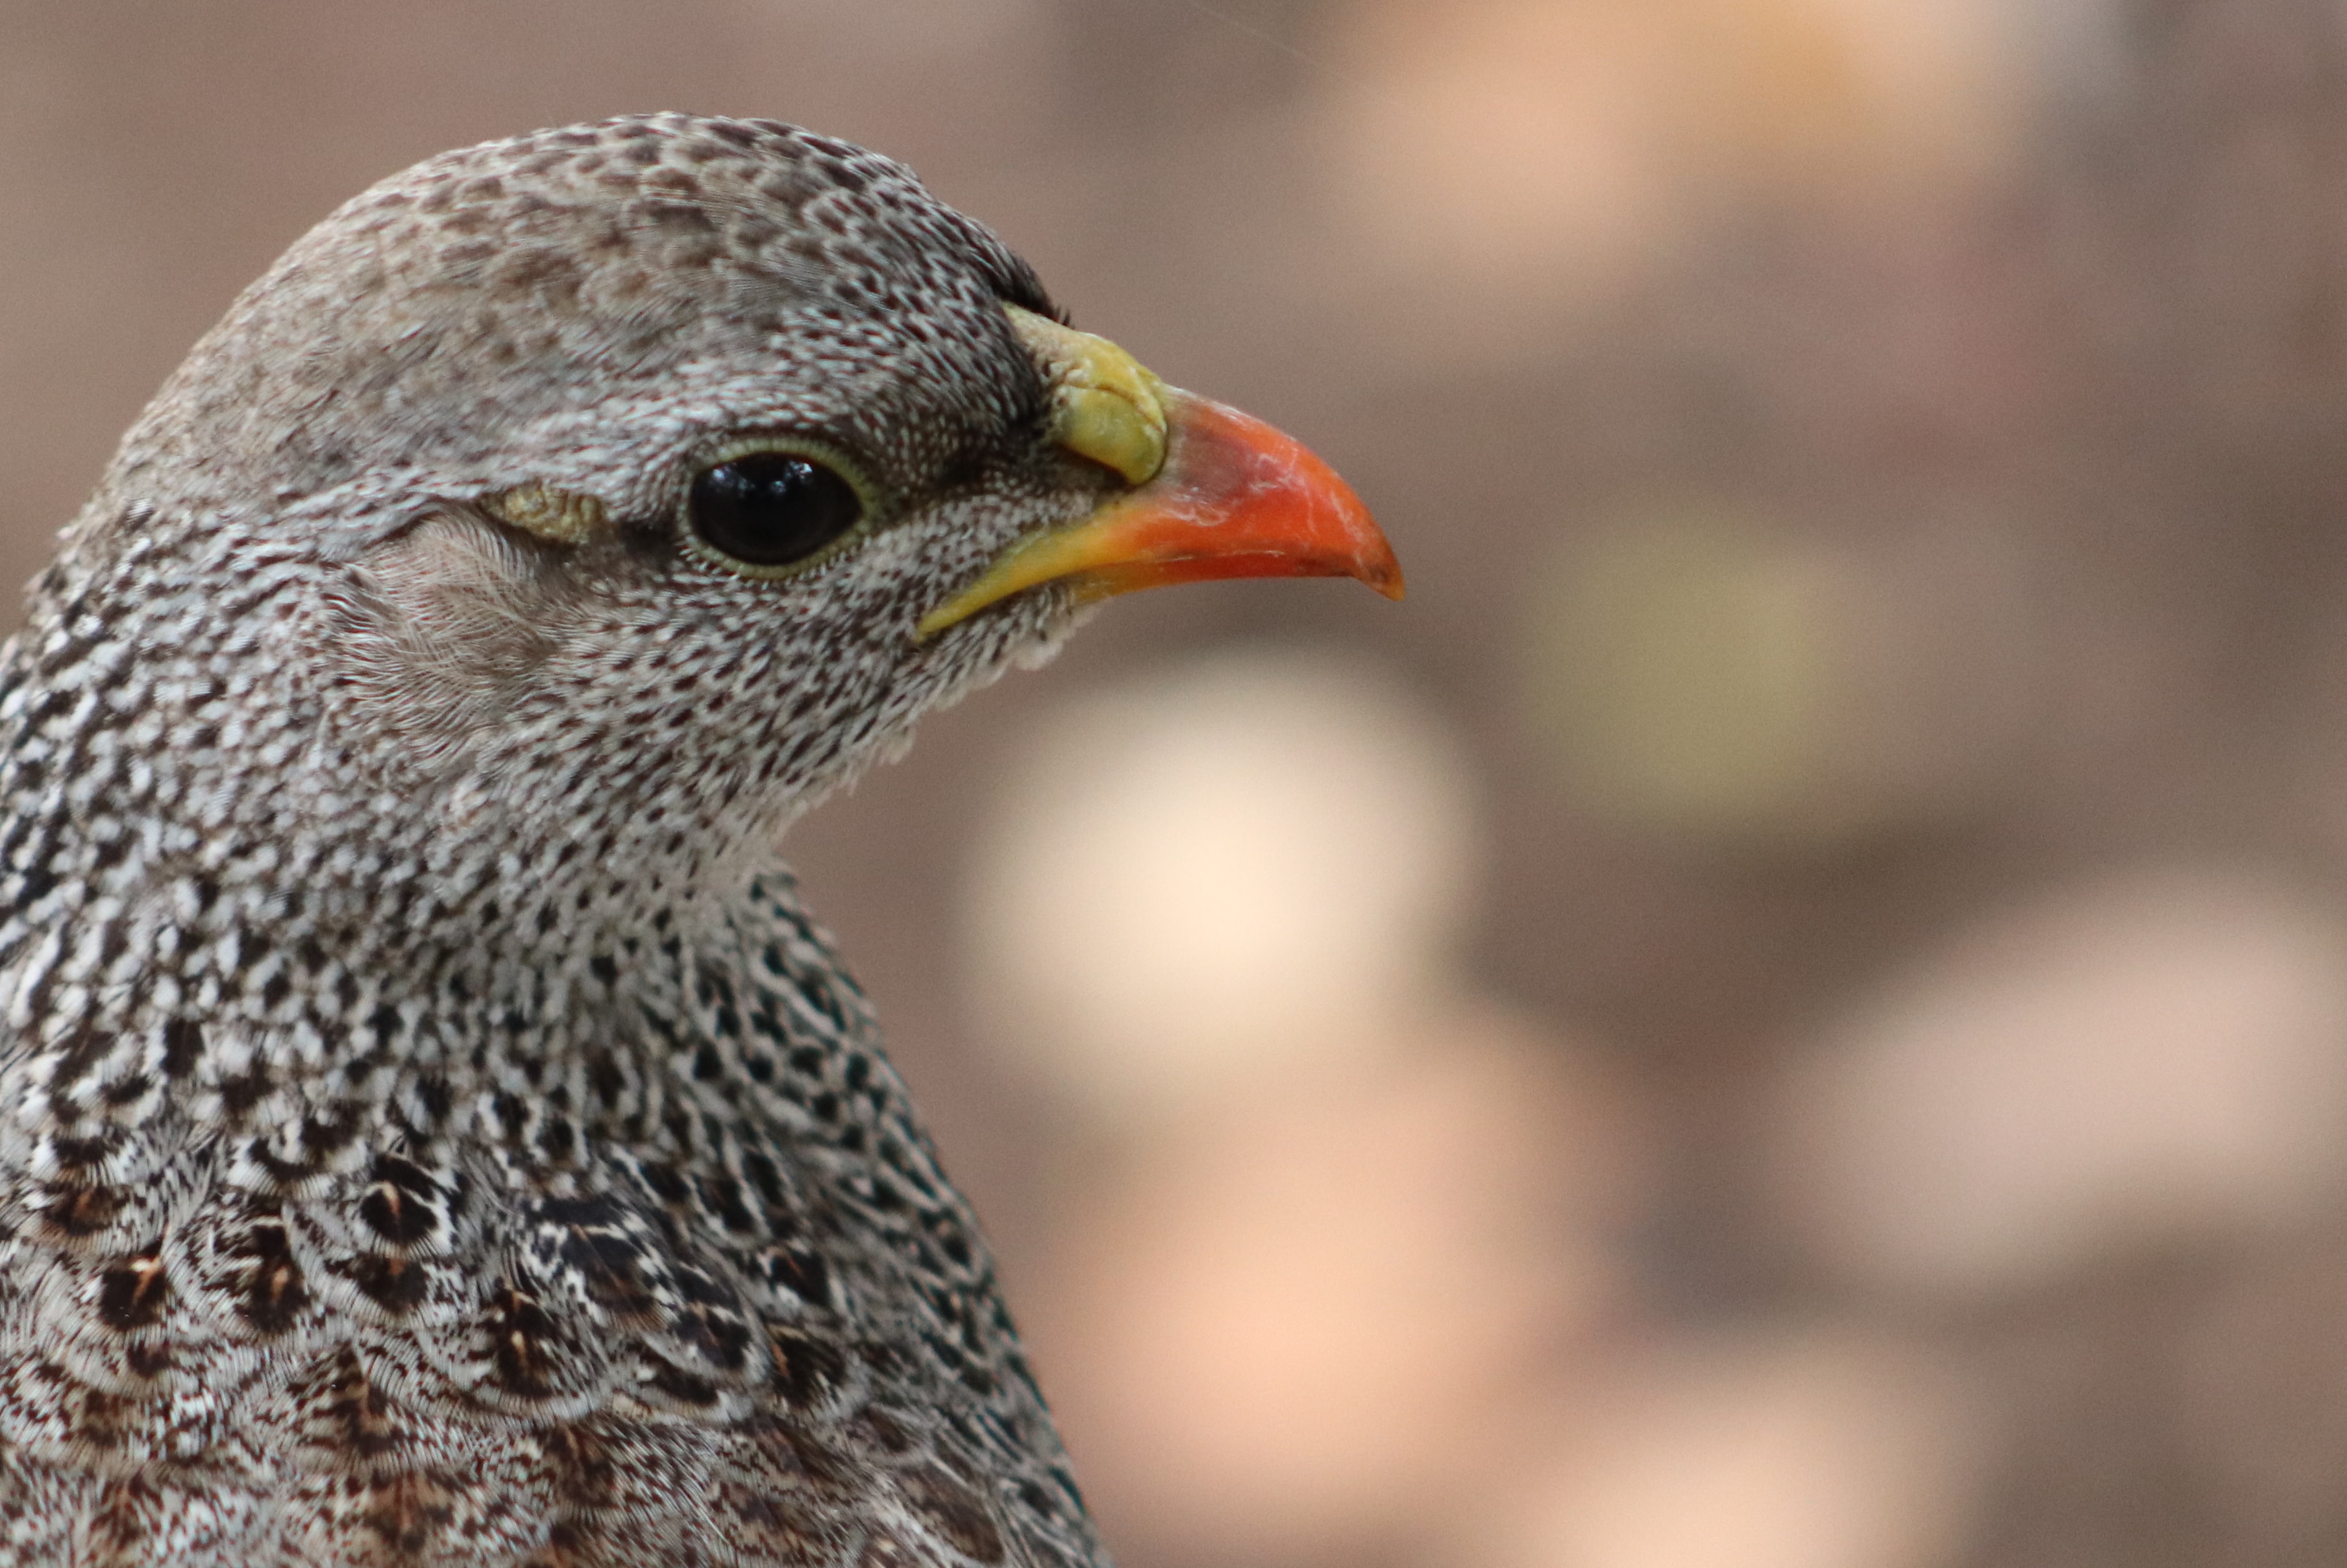 Close up of bird with orange beak depth of field